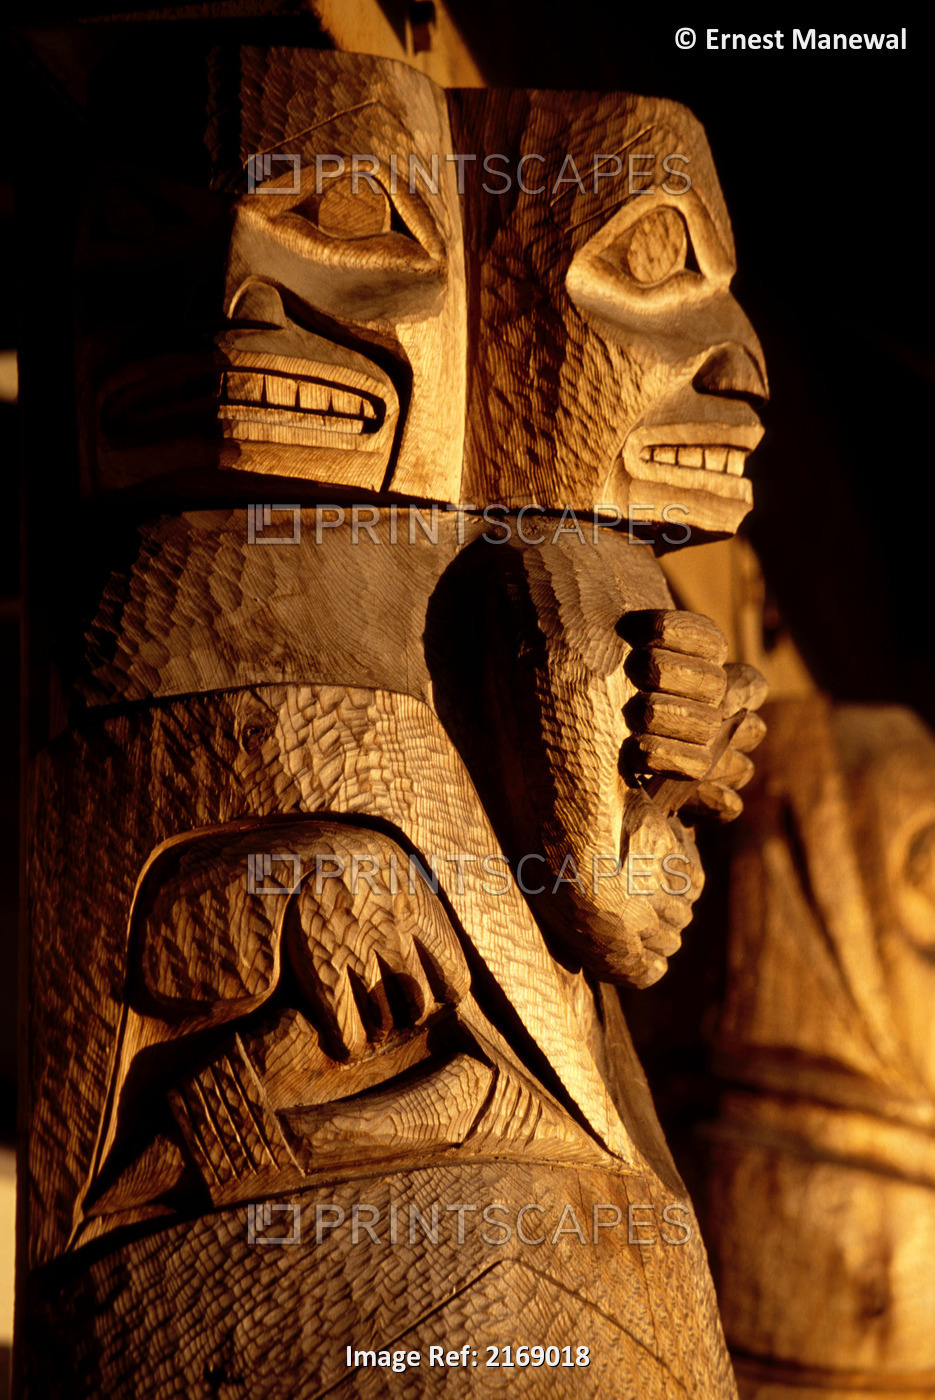 Detail Of Indian Totem Poles Sitka Southeast Alaska